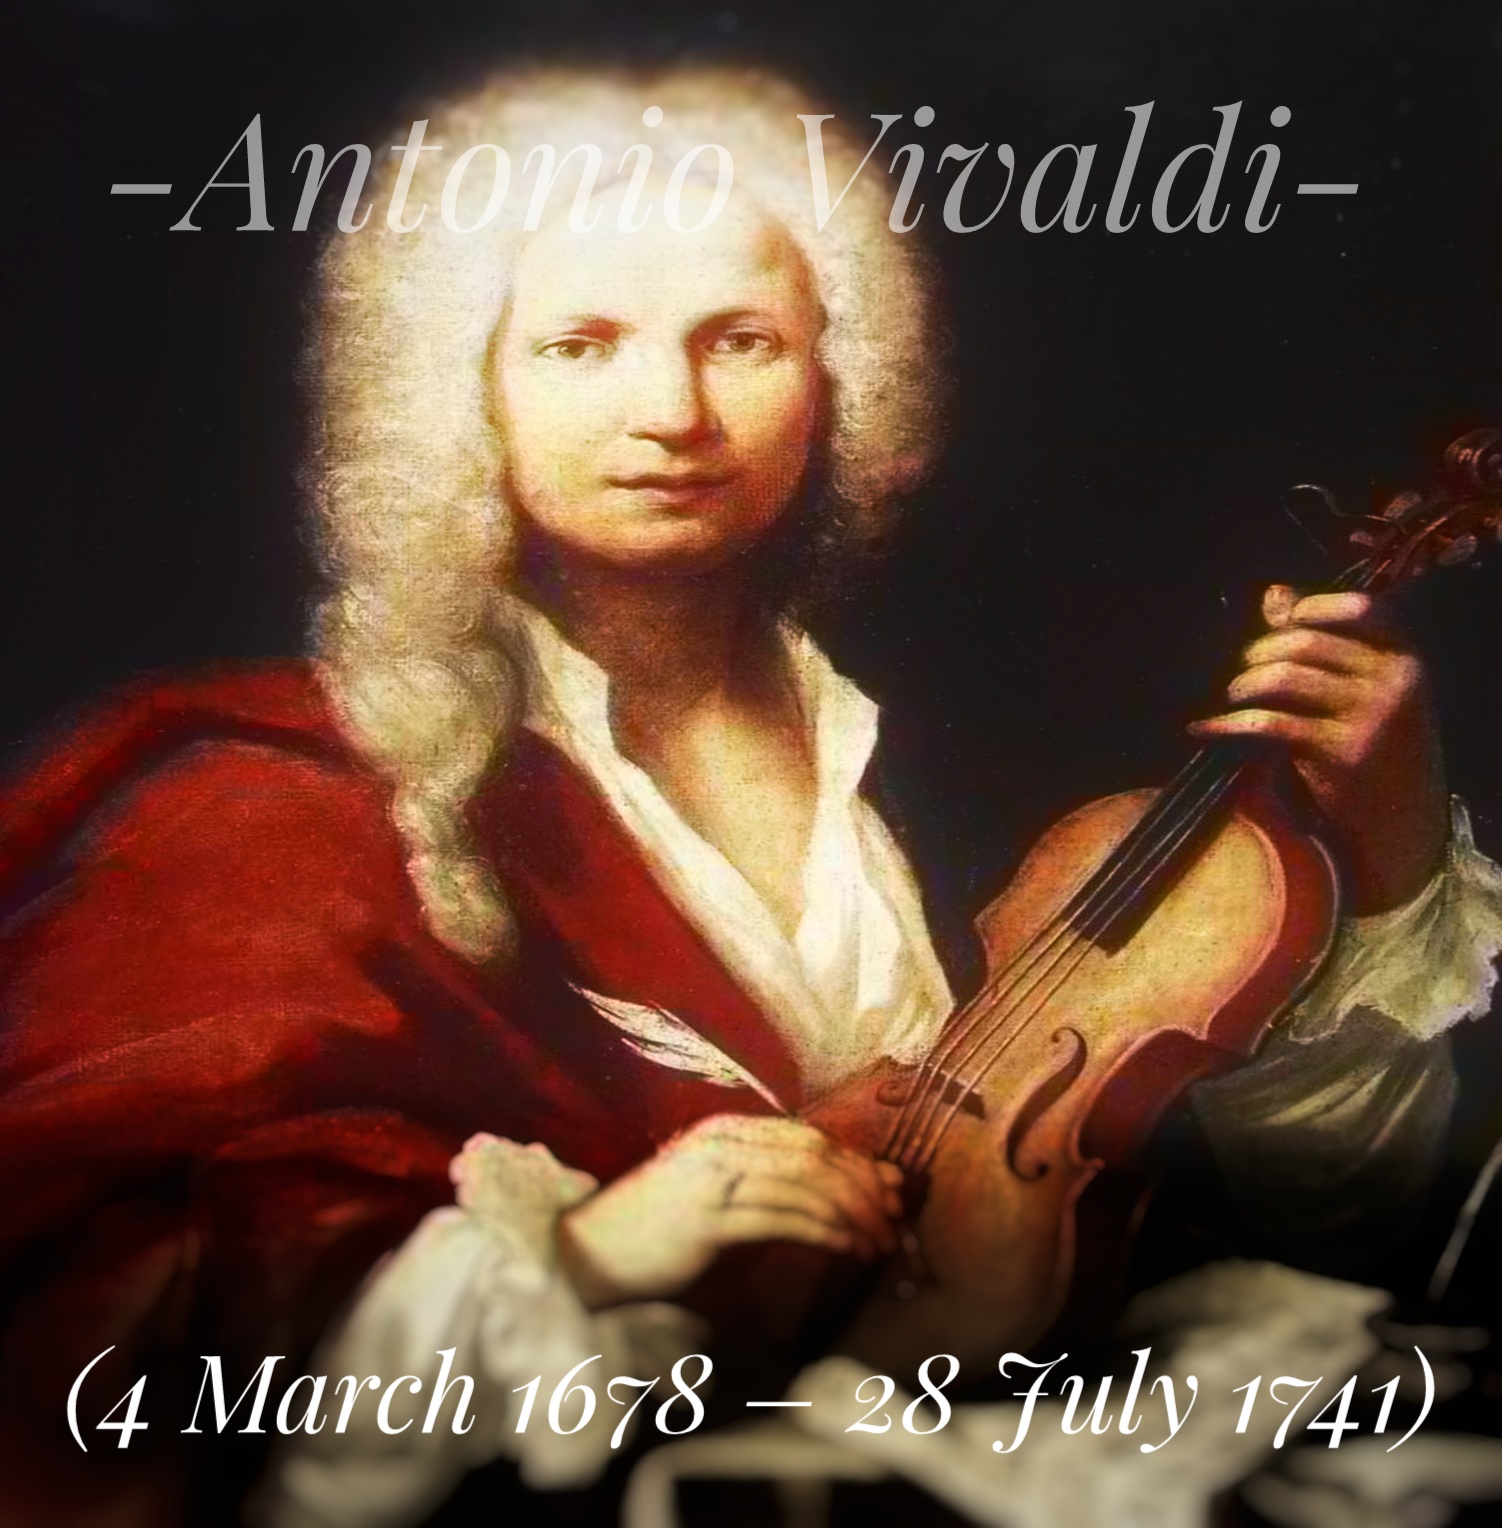 Можно вивальди. Антонио Вивальди. Вивальди портрет. Антонио Вивальди внешность. Антонио Вивальди портрет.